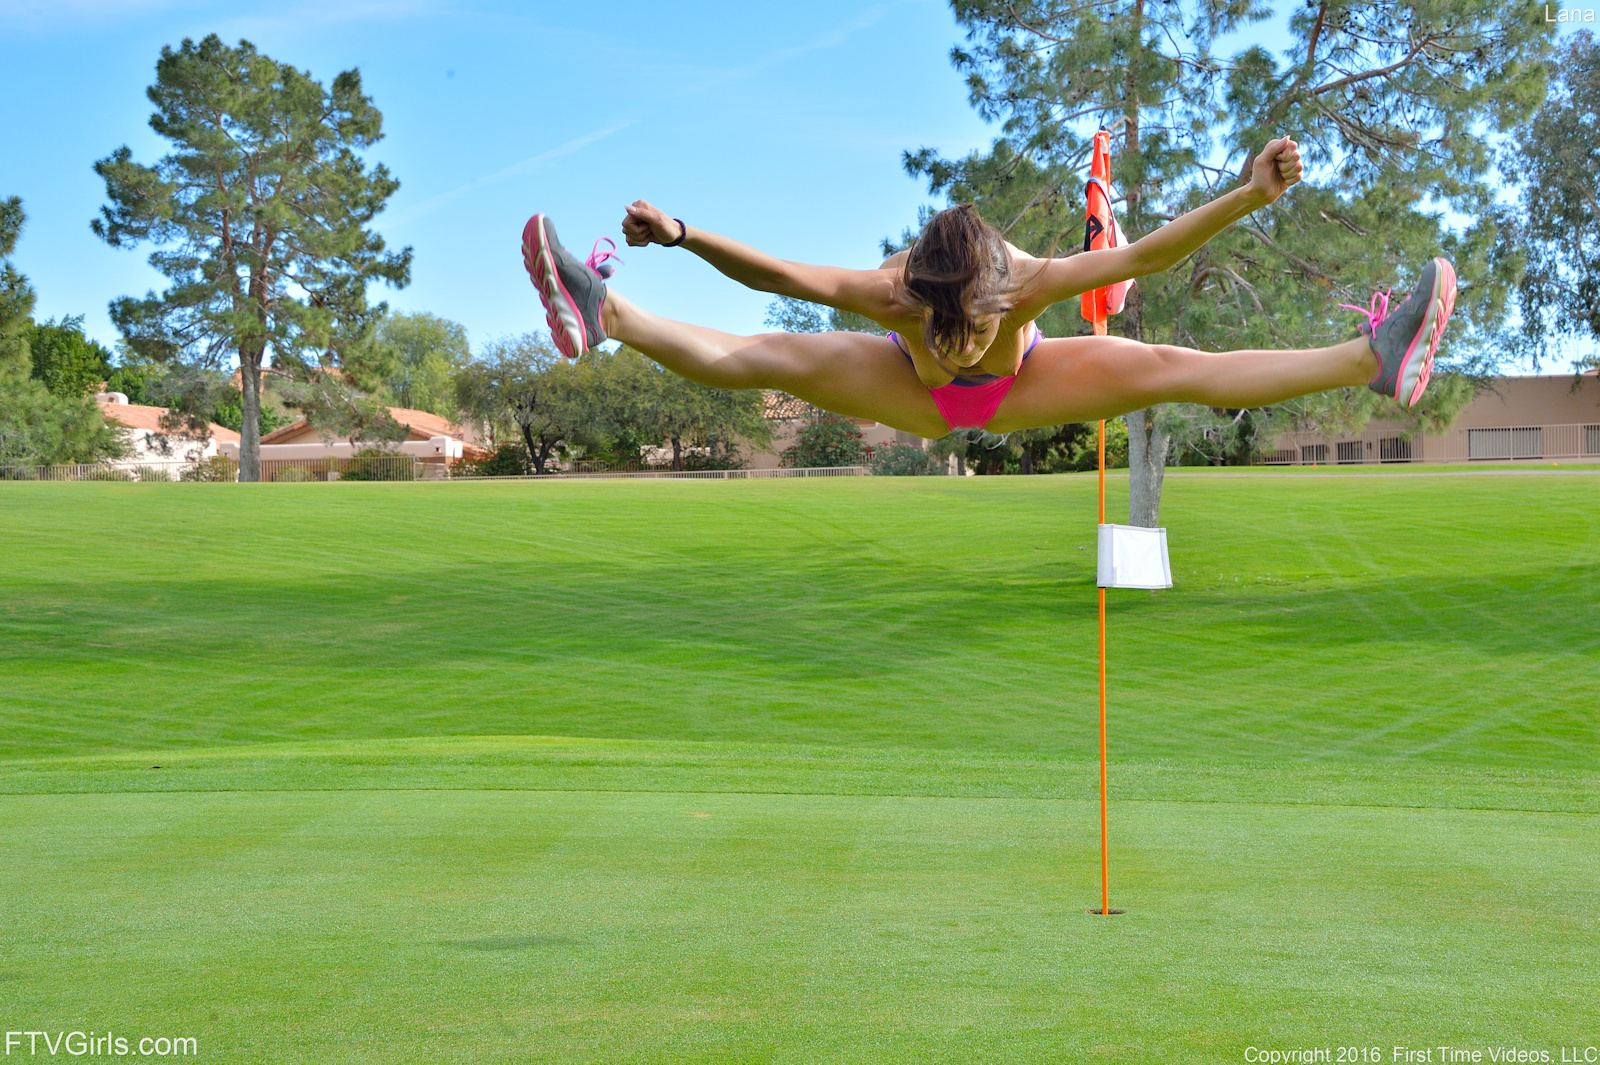 lana-golf-course-flash-in-public-ftvgirls-24